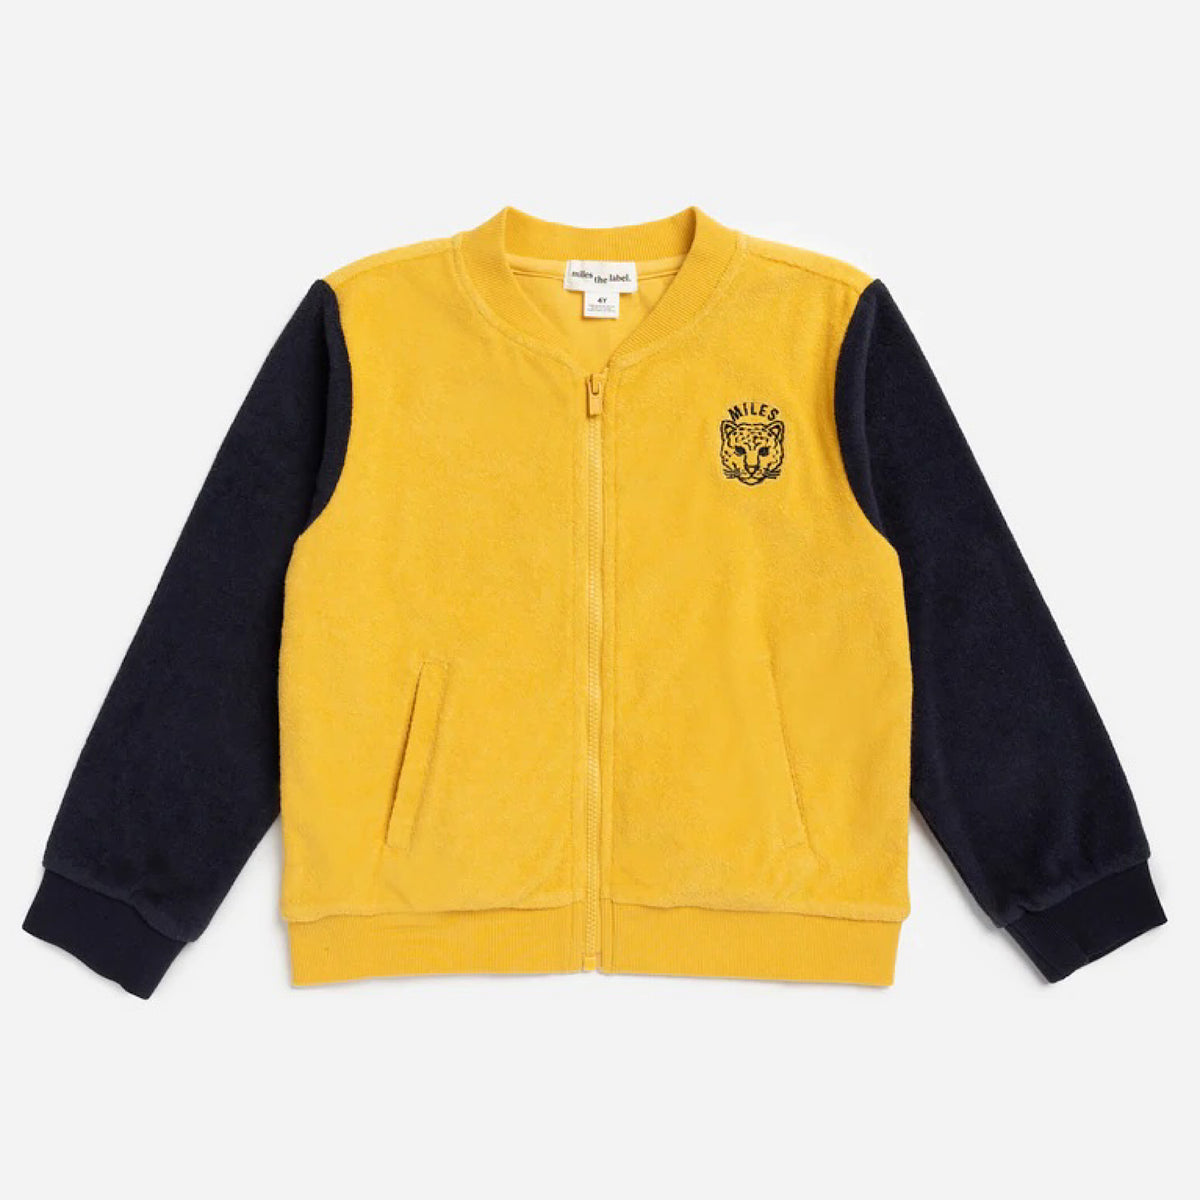 Cool Cats Yellow Terry Cloth Varsity Jacket